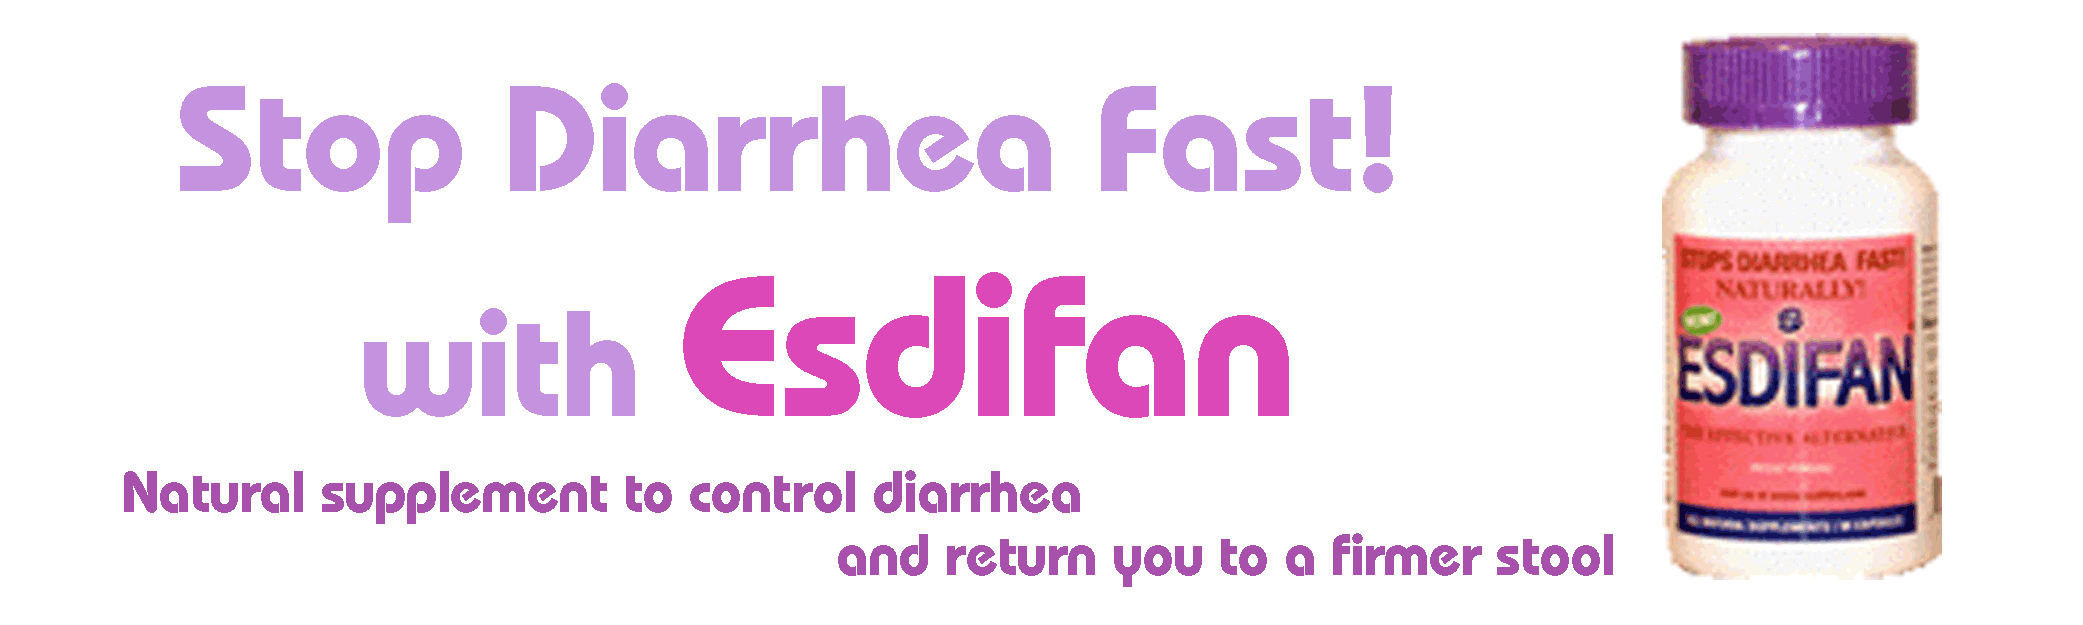 Stop Diarrhea Fast